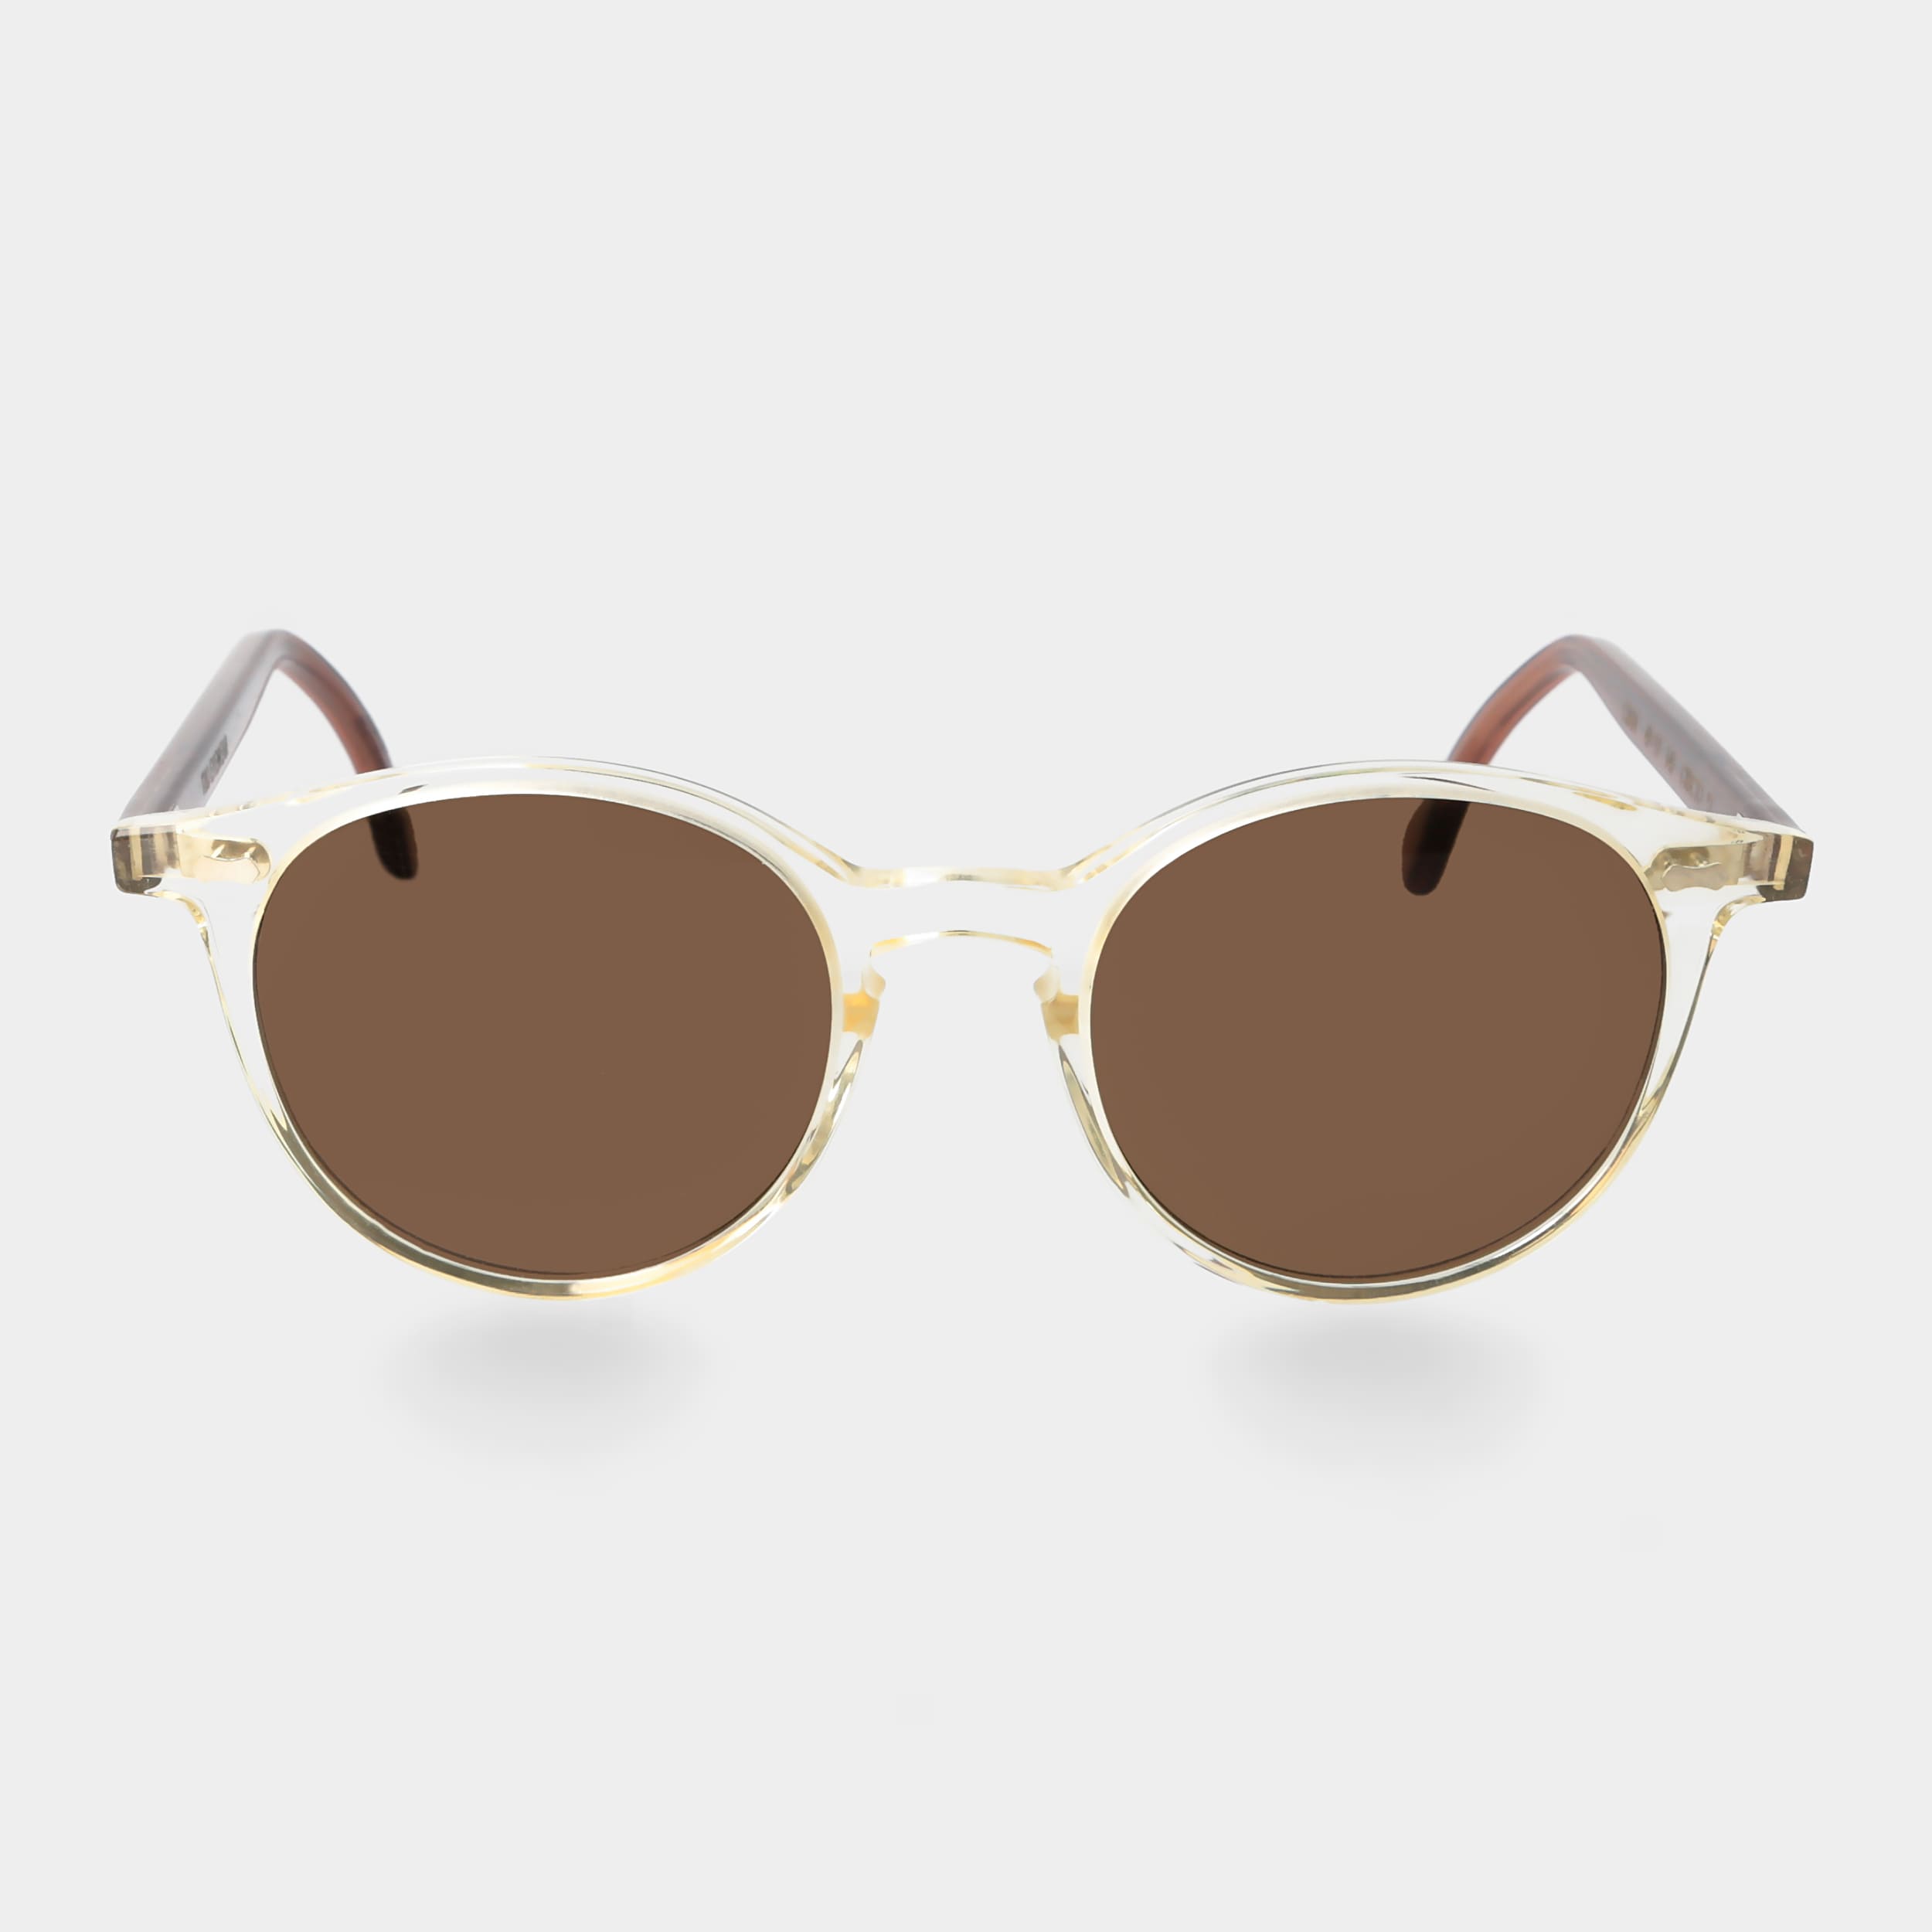 handmade Brown Sunglasses in Italy Lenses, with | TBD Eyewear